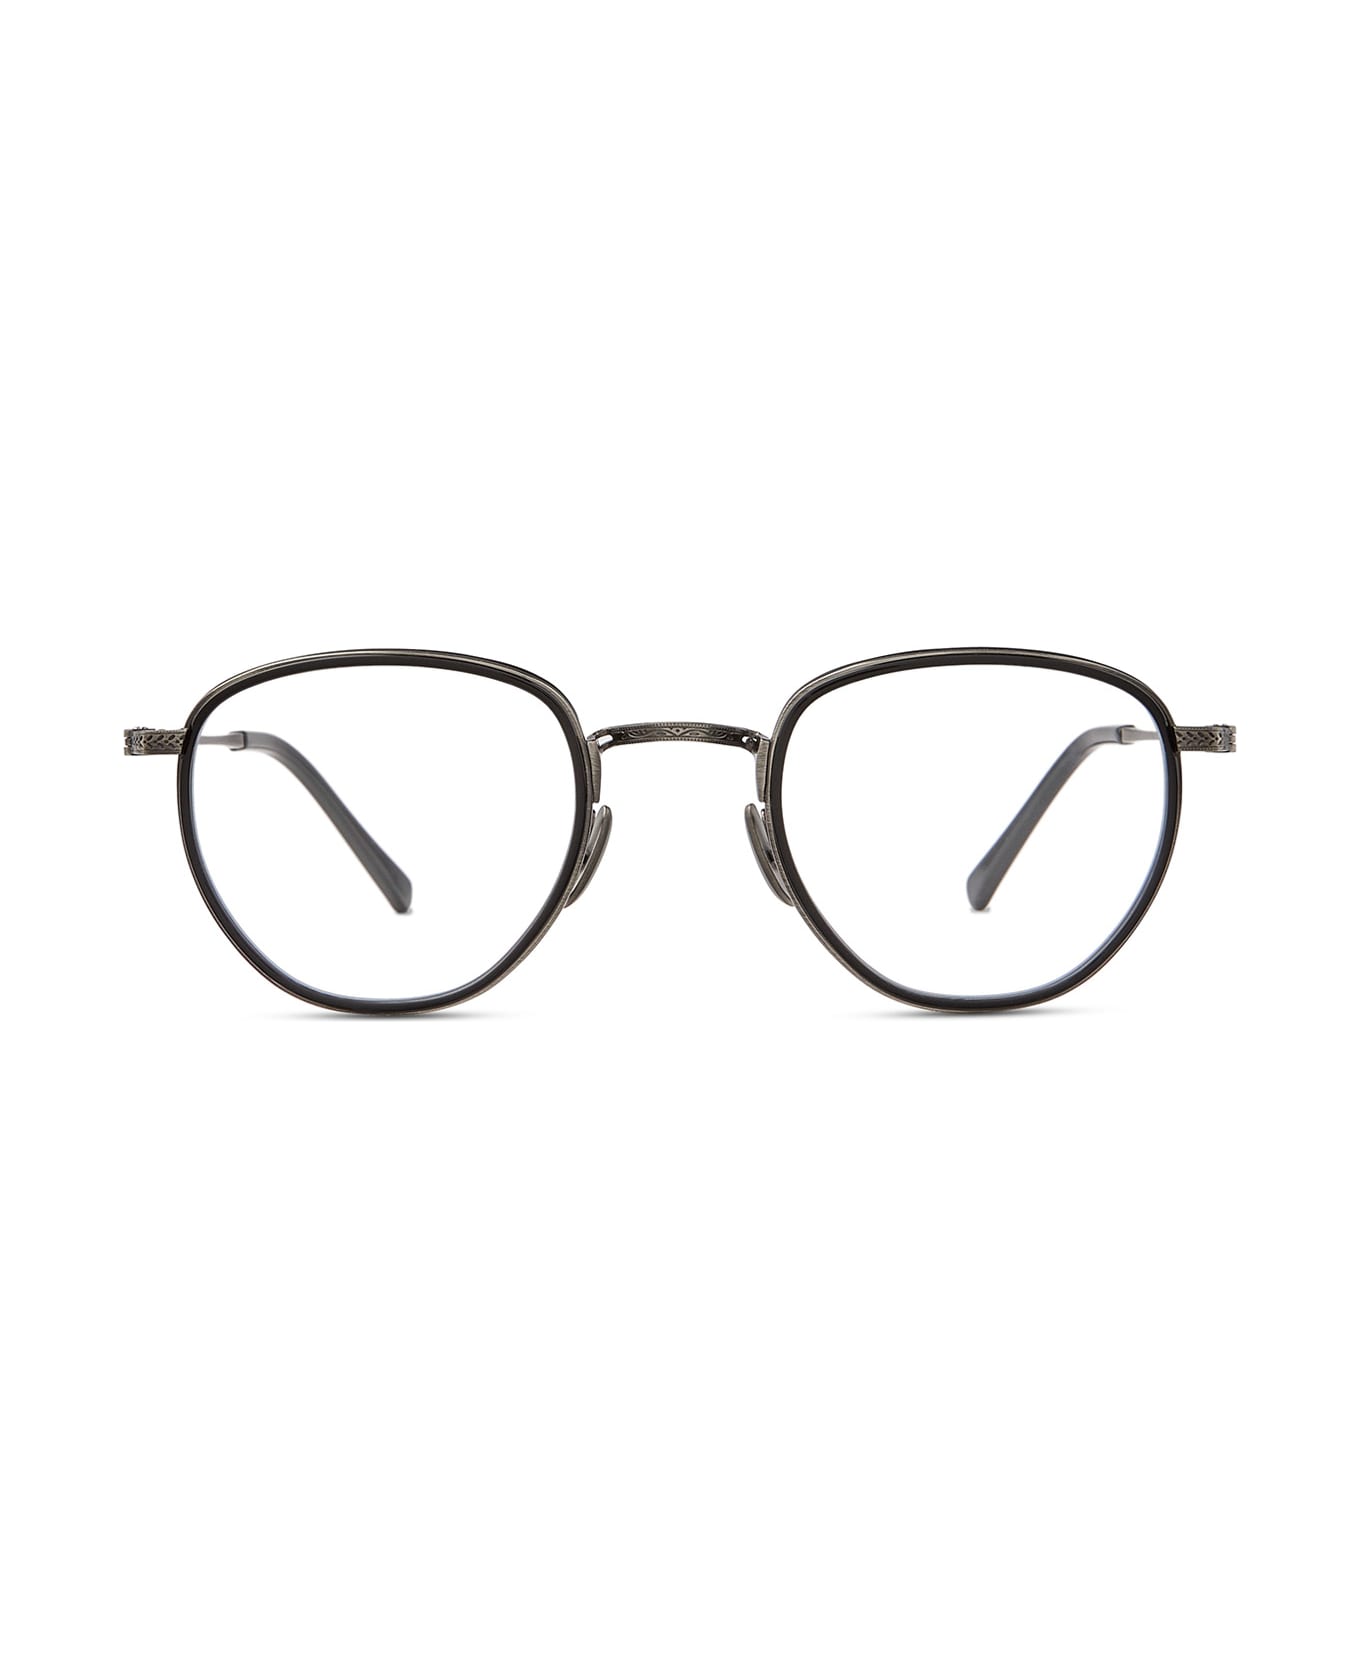 Mr. Leight Roku C Black-pewter Glasses - Black-Pewter アイウェア